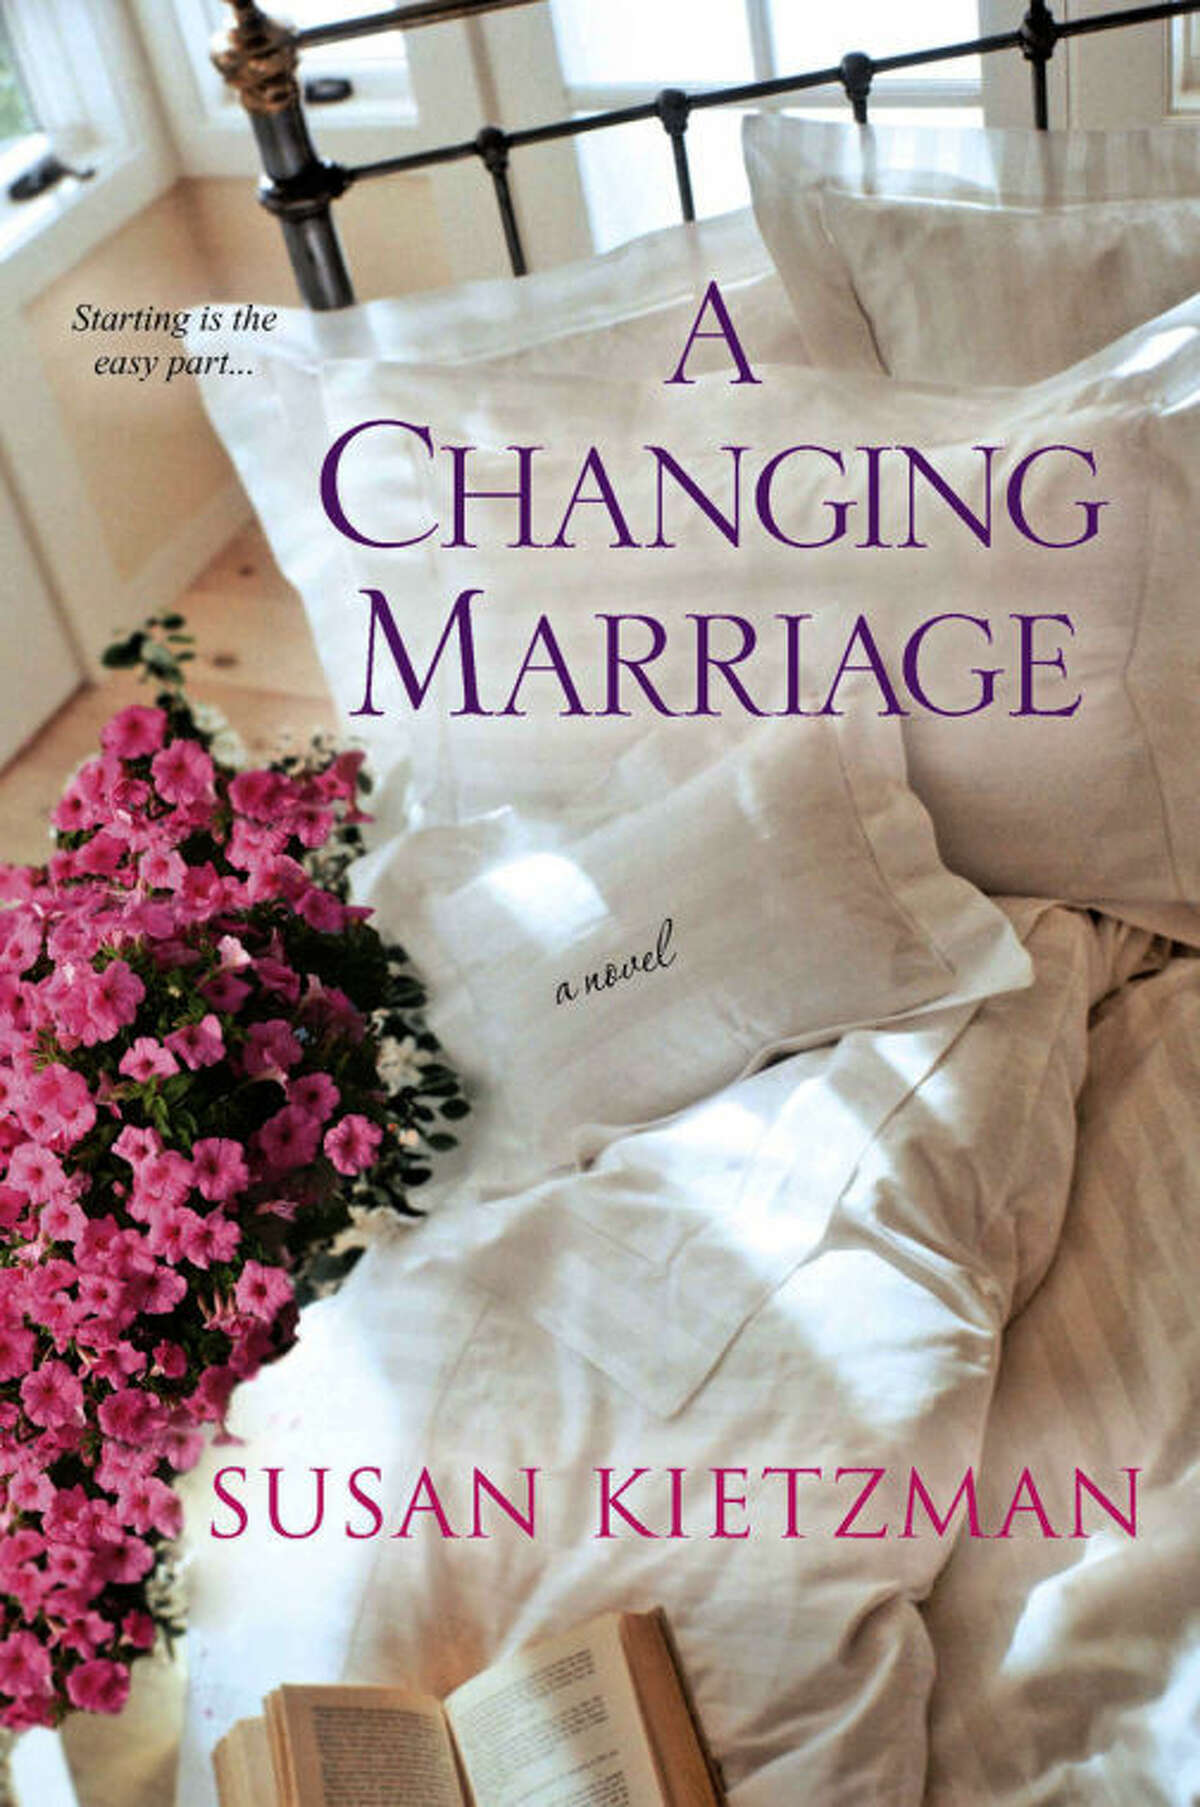 Susan Kietzman's latest novel